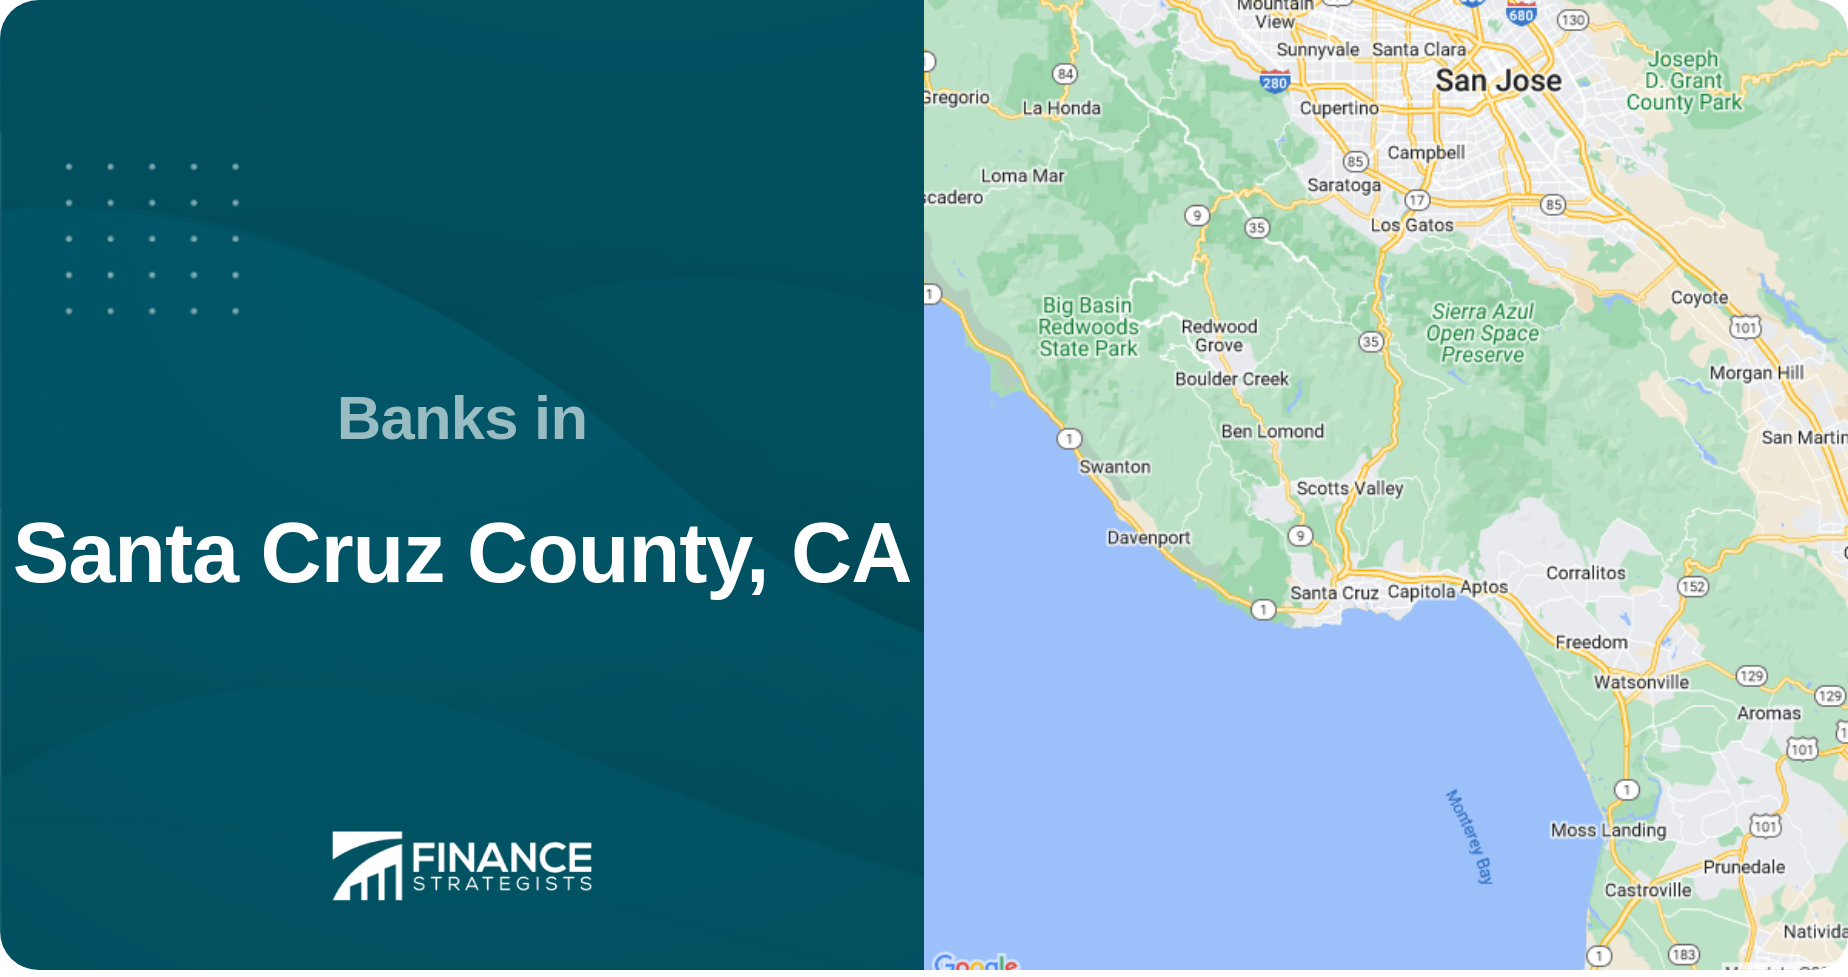 Banks in Santa Cruz County, CA